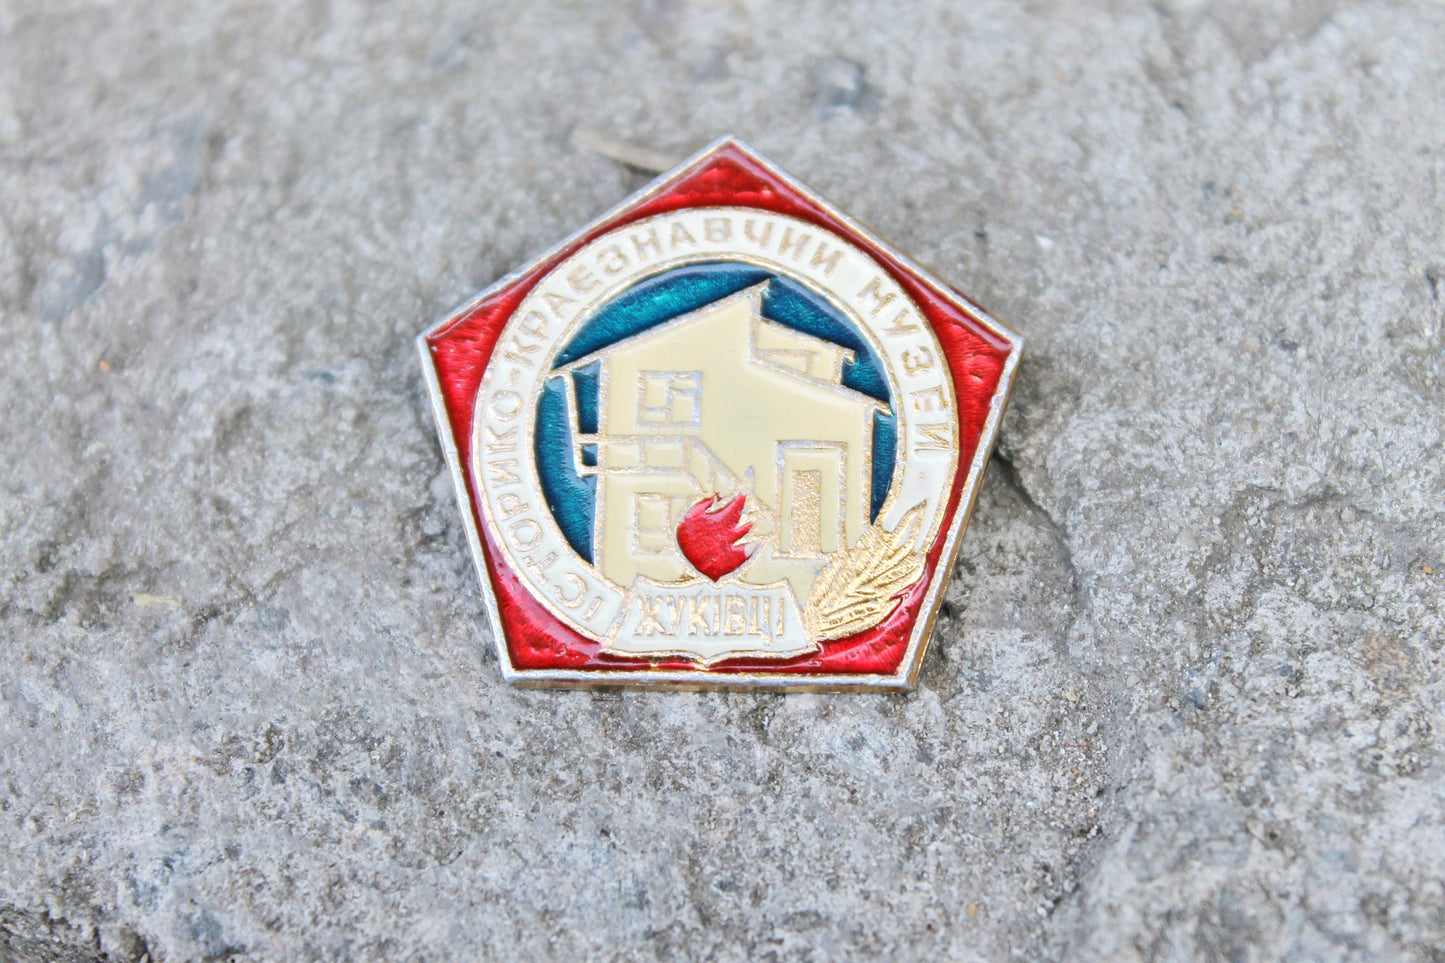 Vintage soviet USSR pin badge Zhukivtsi museum of history - USSR pin - vintage soviet badge - 1970